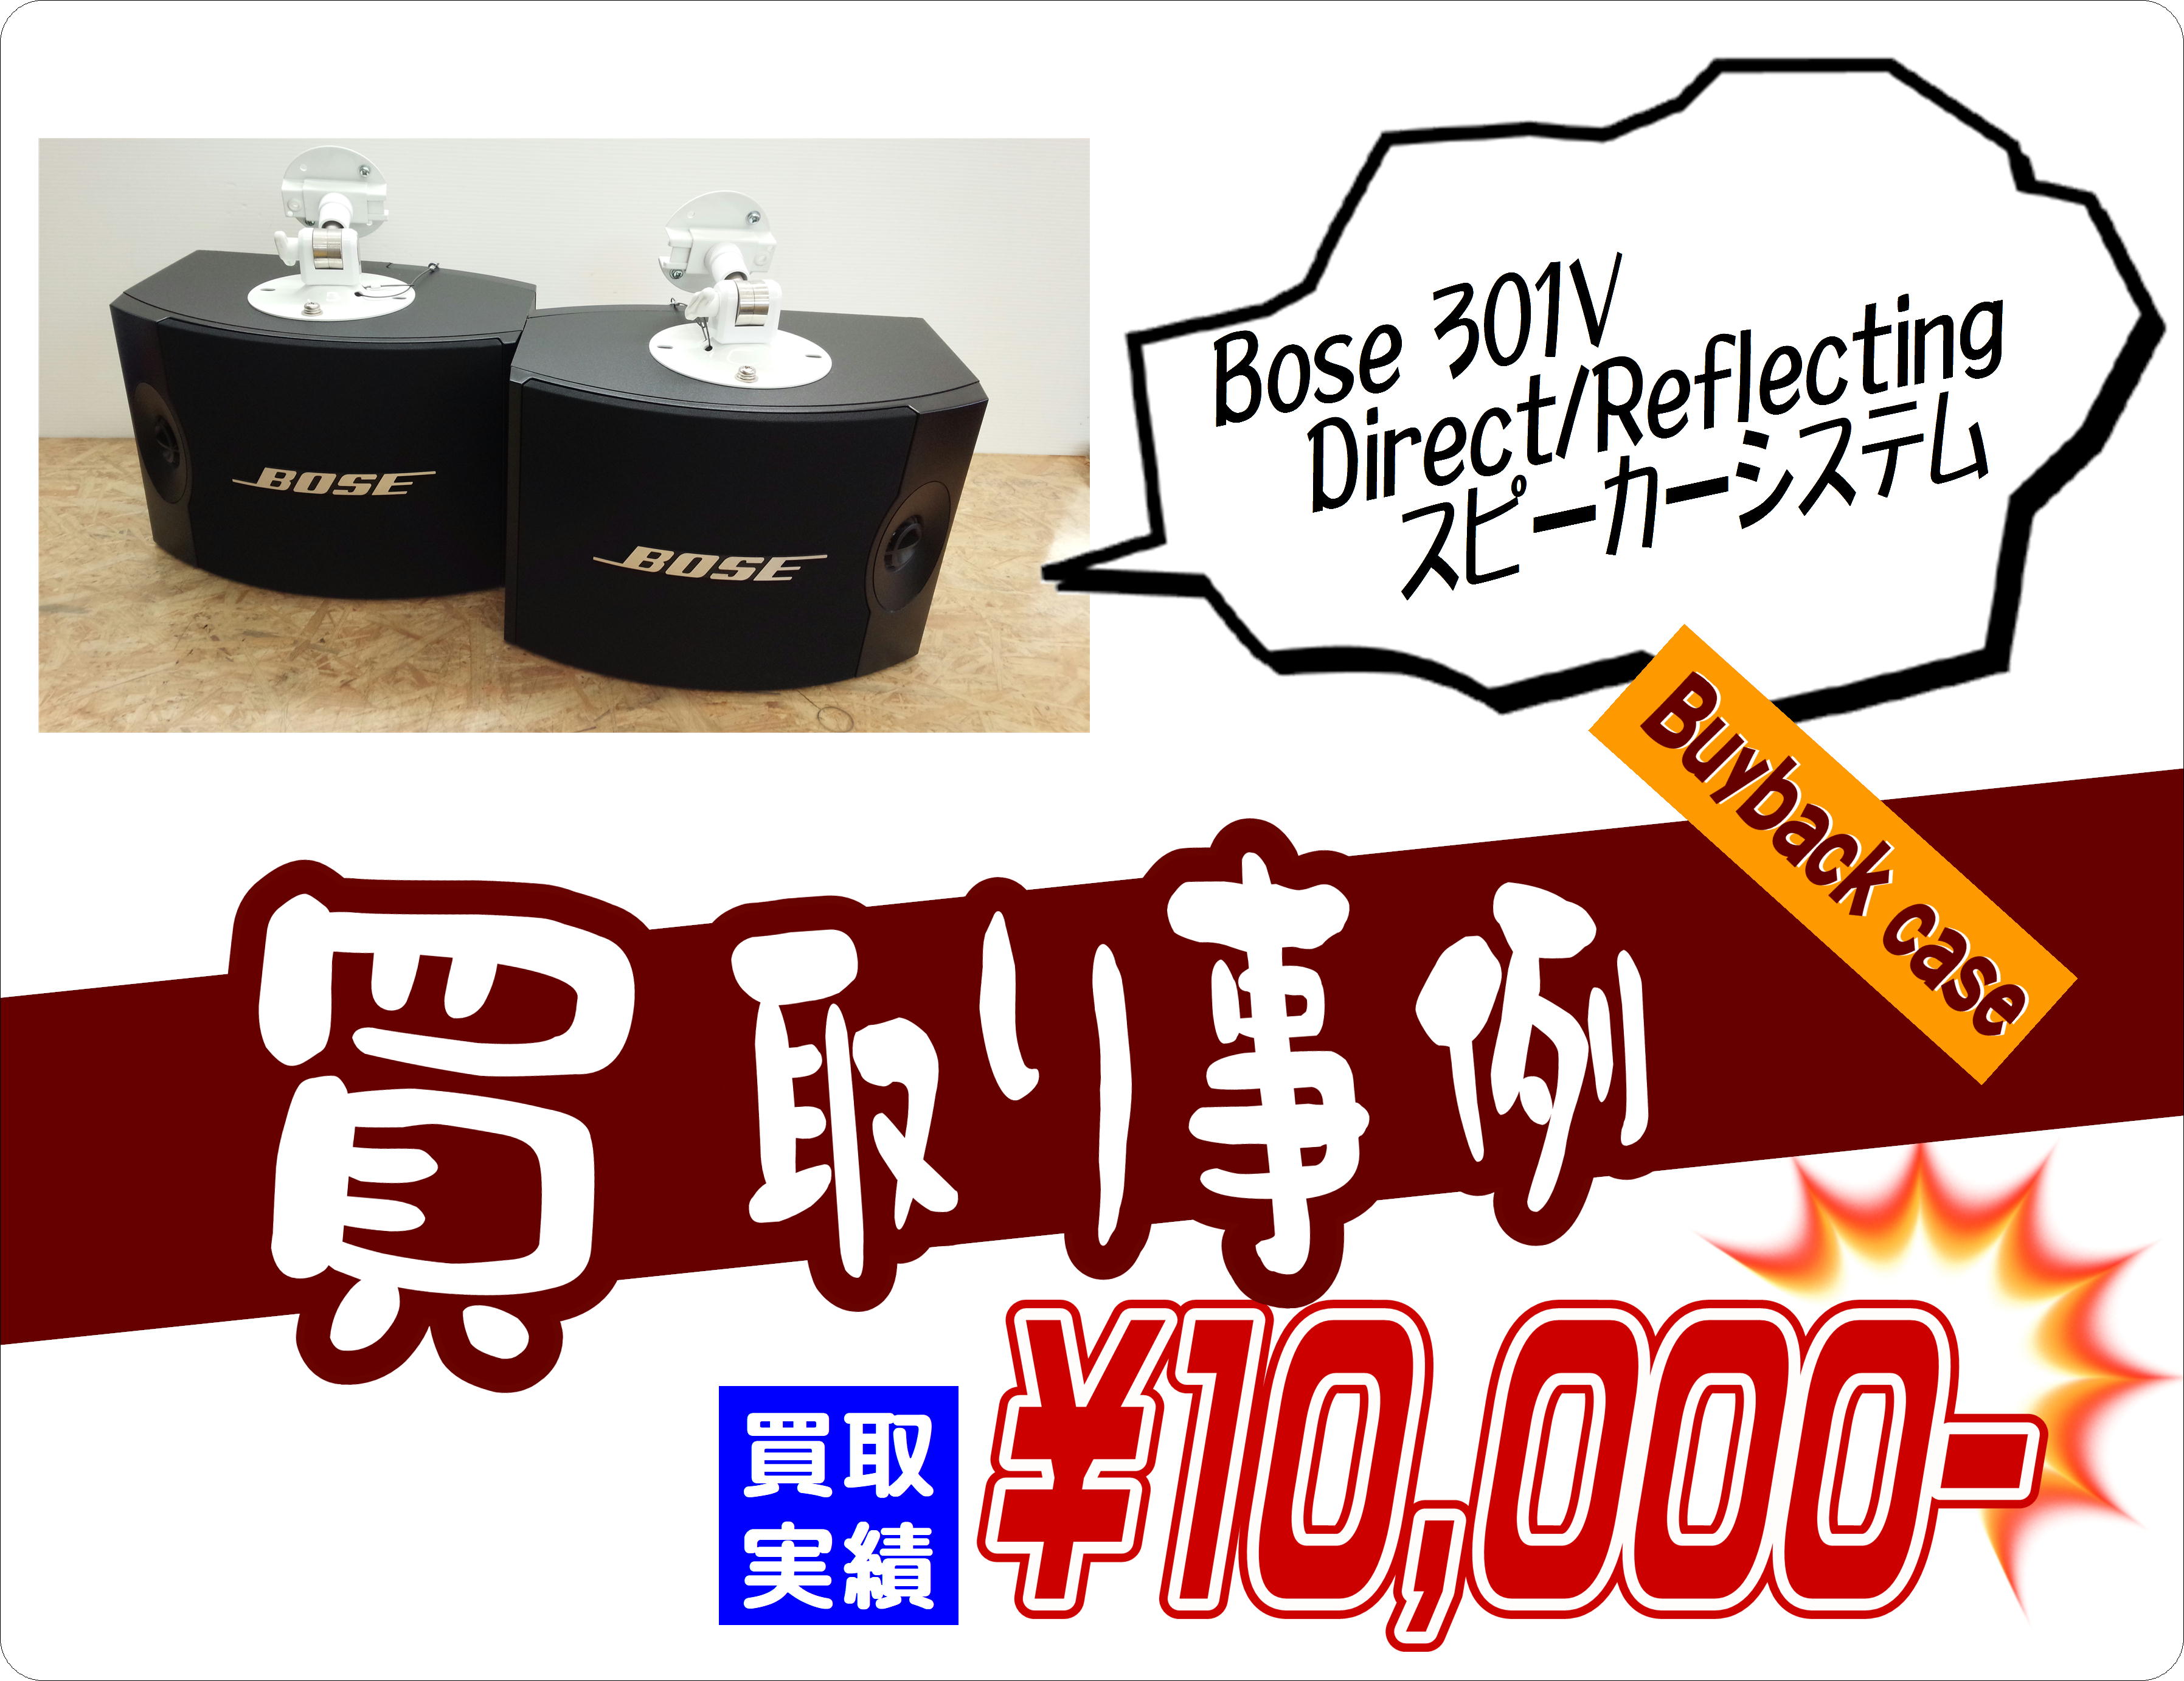 Bose 301V Direct Reflecting スピーカーシステム